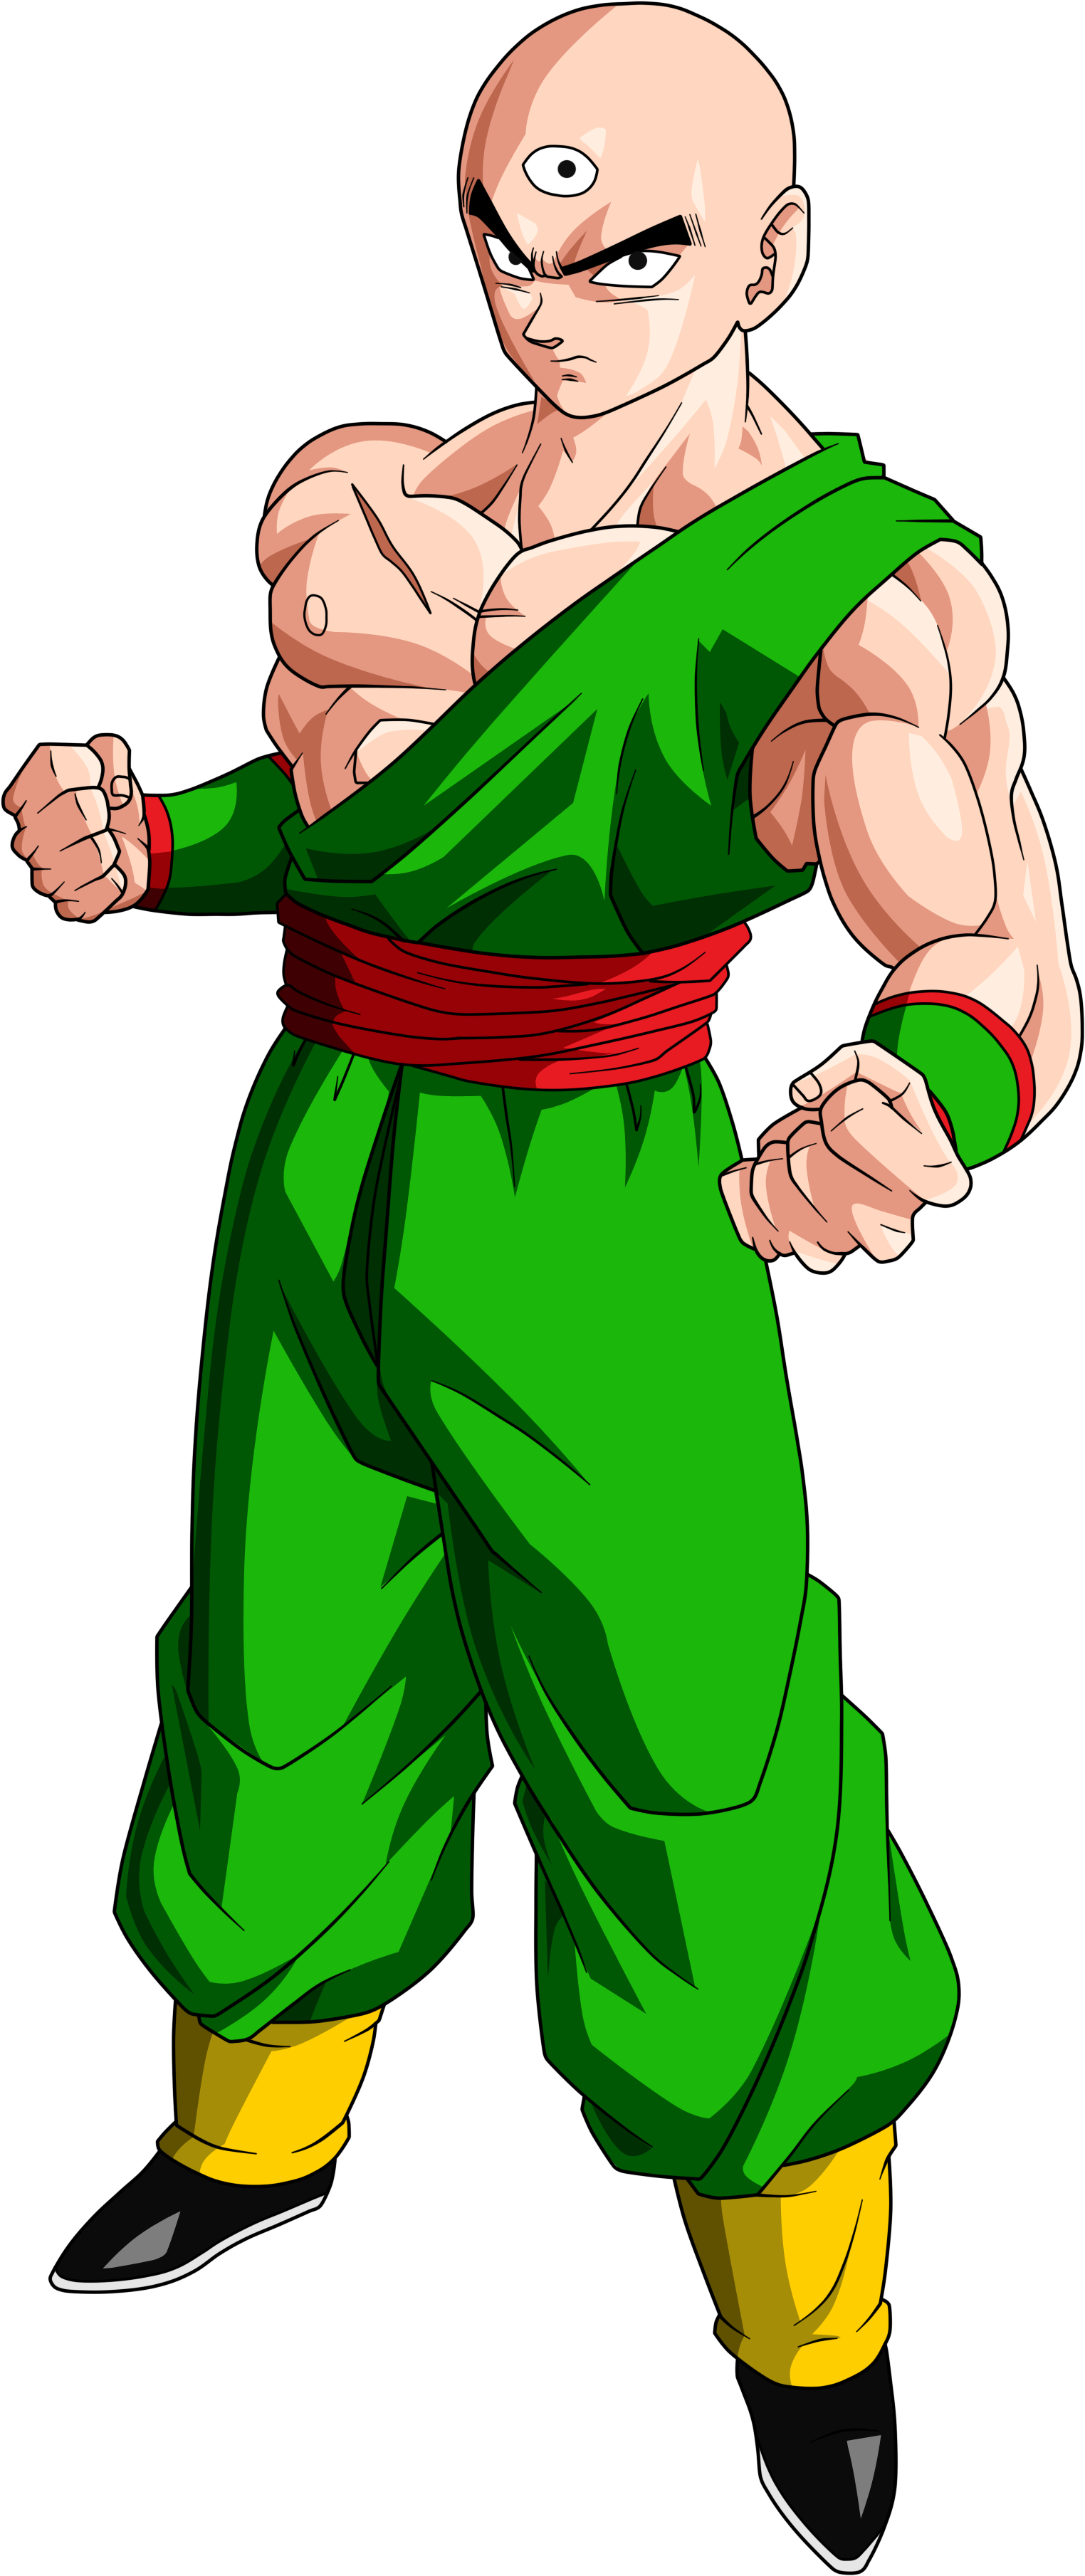 Can Current Tien Beat Namek Goku Who Fought Frieza - Dragon Ball Z (2500x3824)